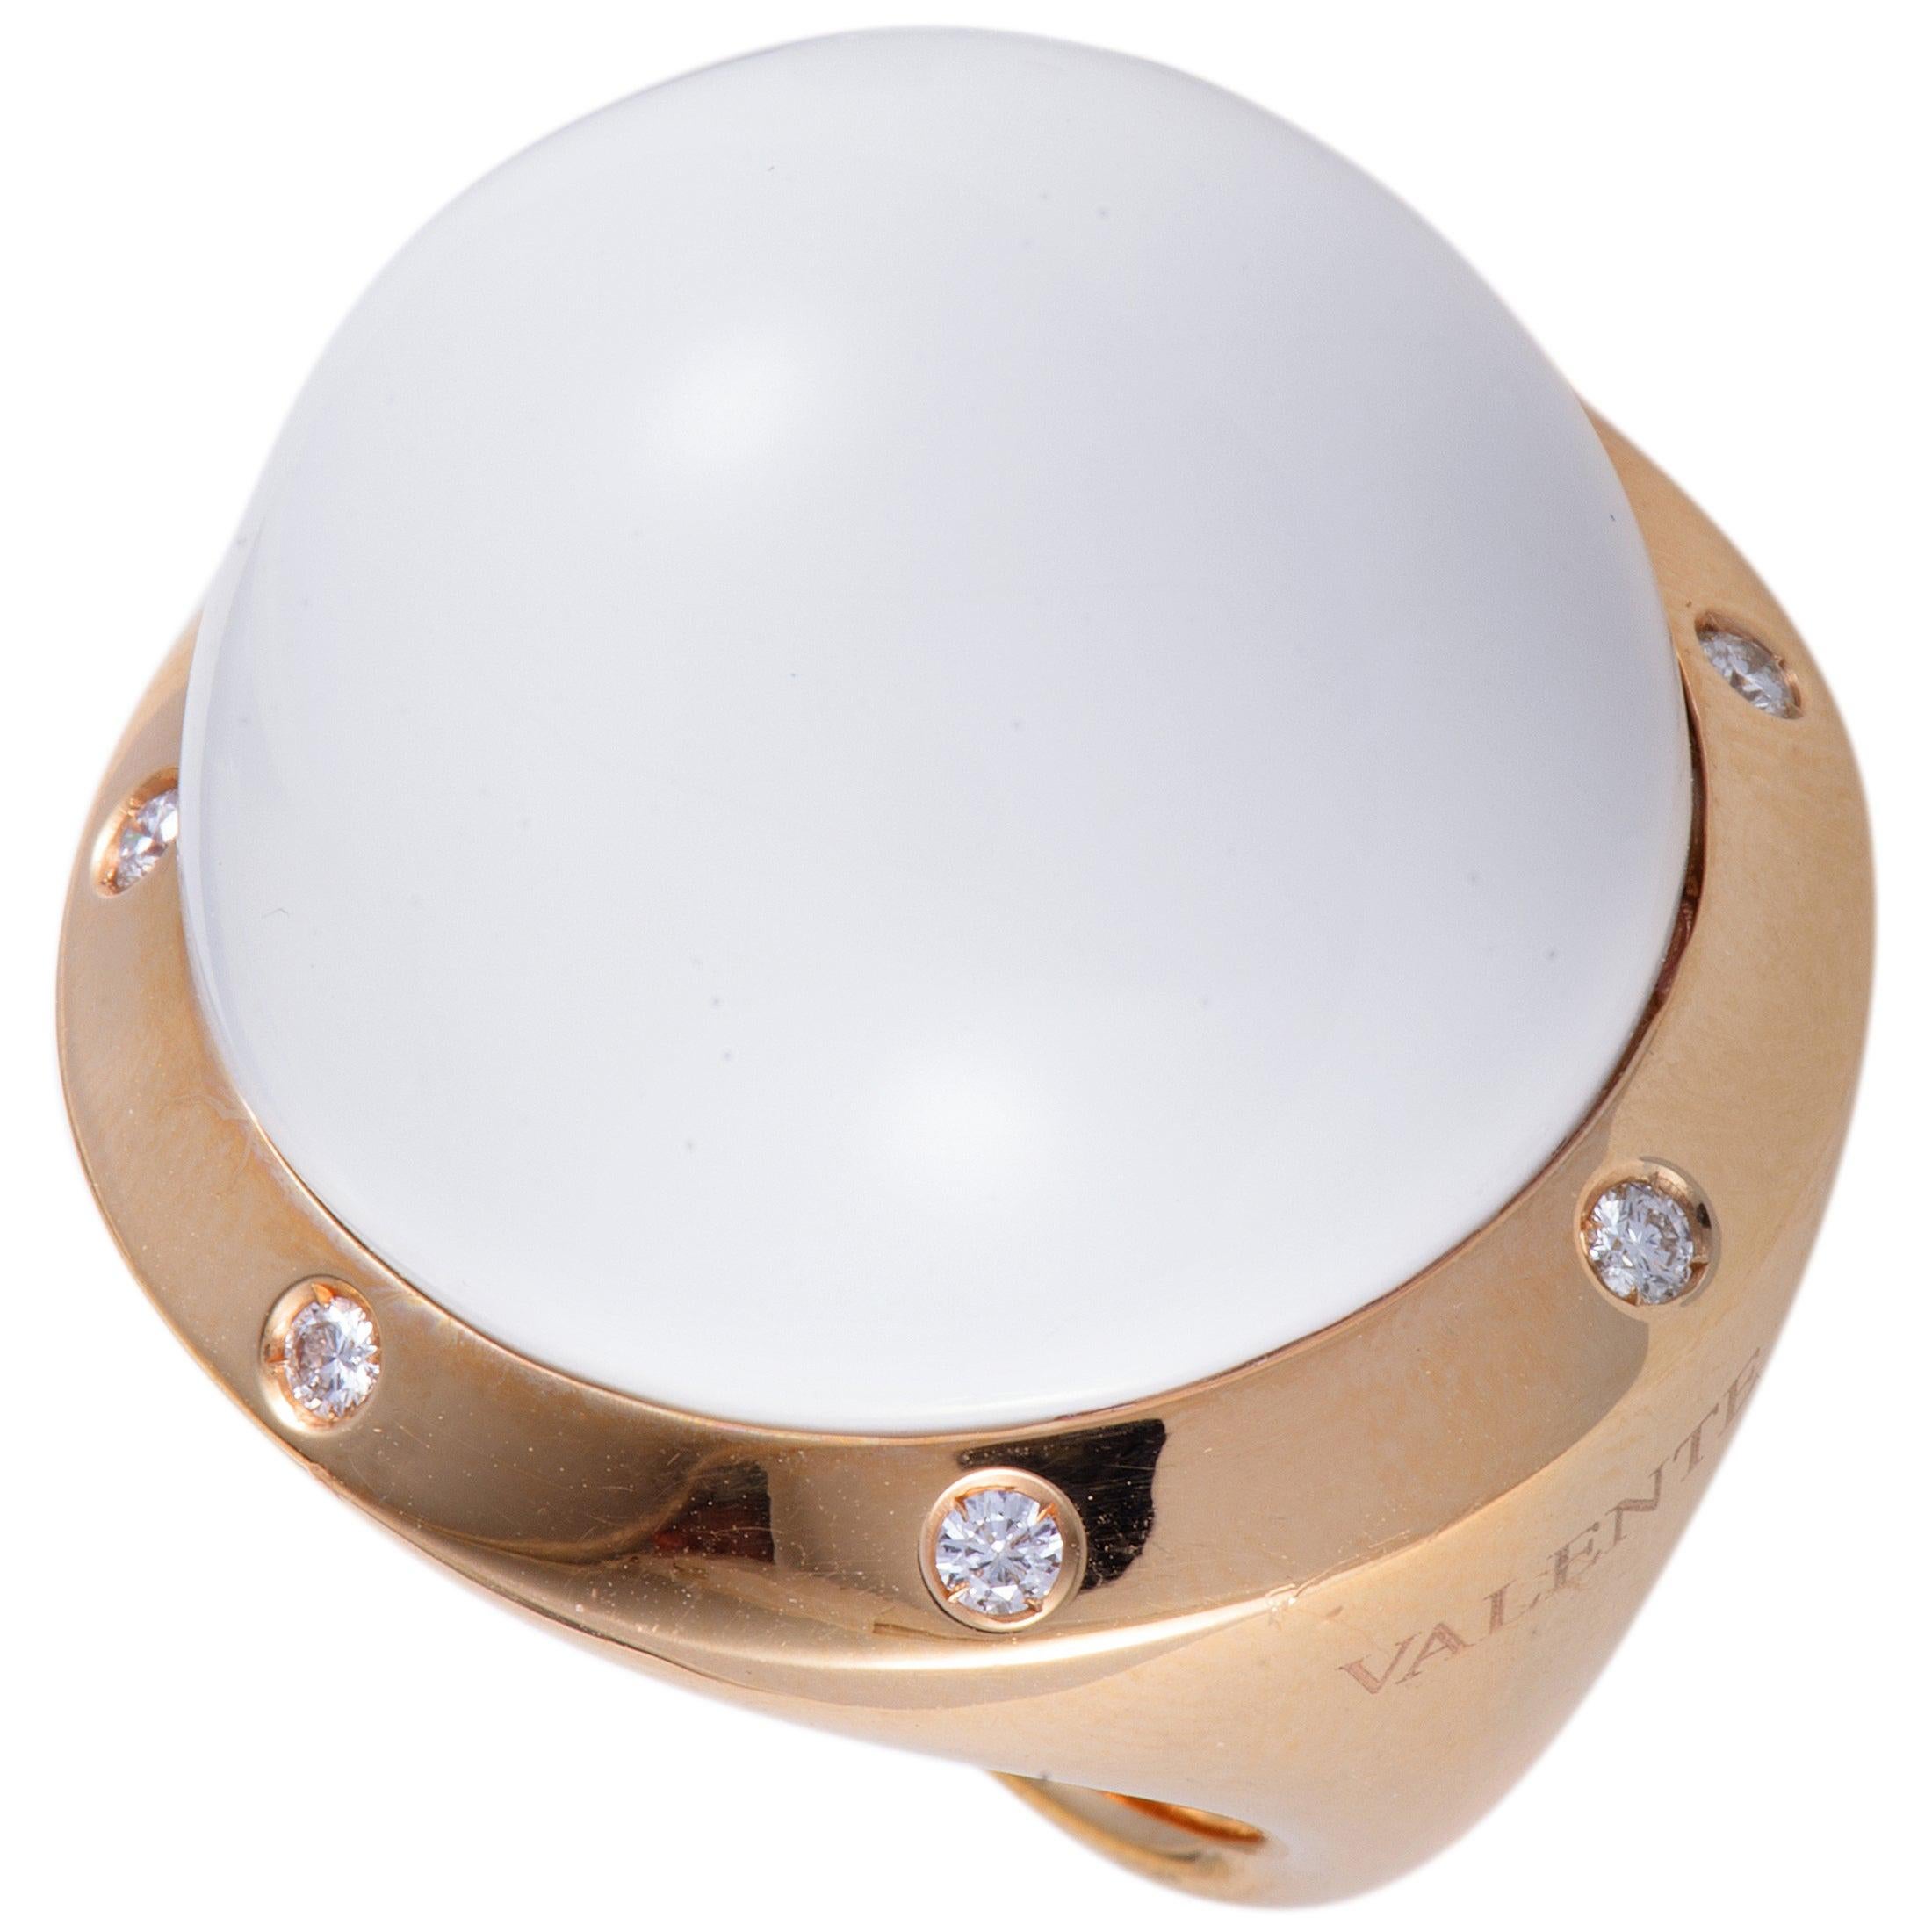 Valente Milano 18 Karat Rose Gold Diamond and White Agate Large Dome Ring